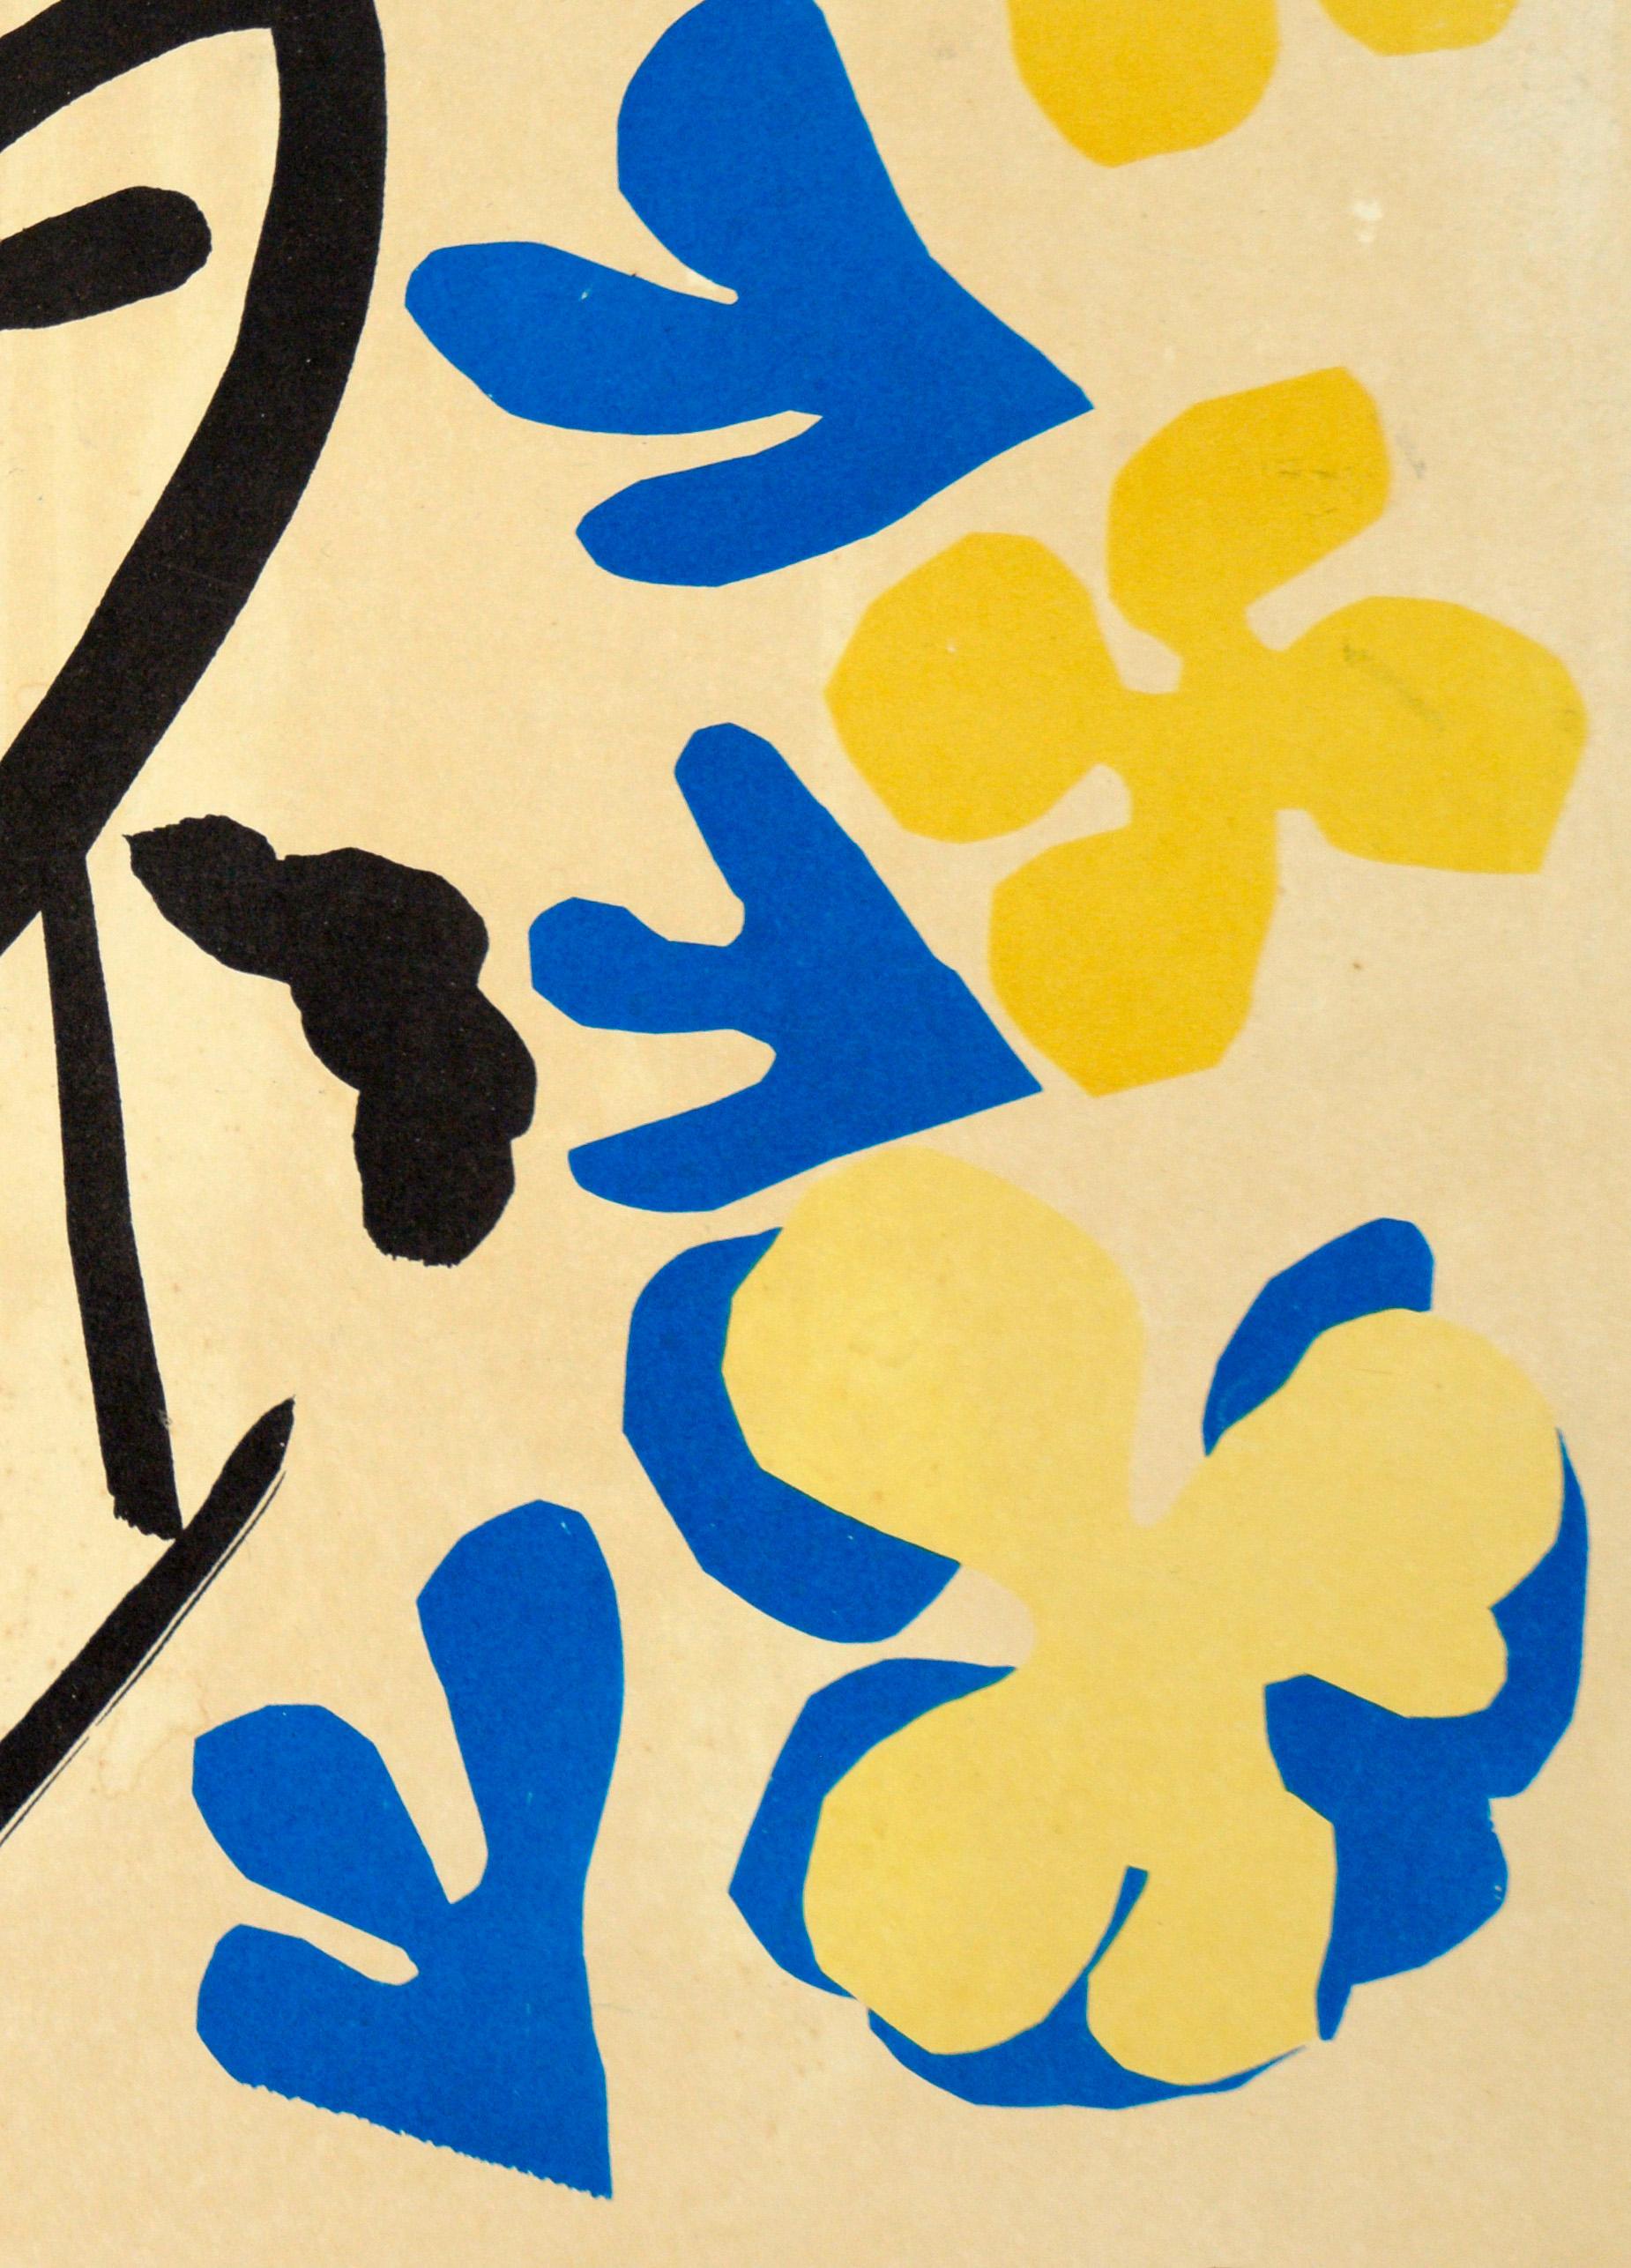 Original Vintage Henri Matisse Exhibition Poster, The Tate Gallery, 1953 - Fauvist Print by (after) Henri Matisse